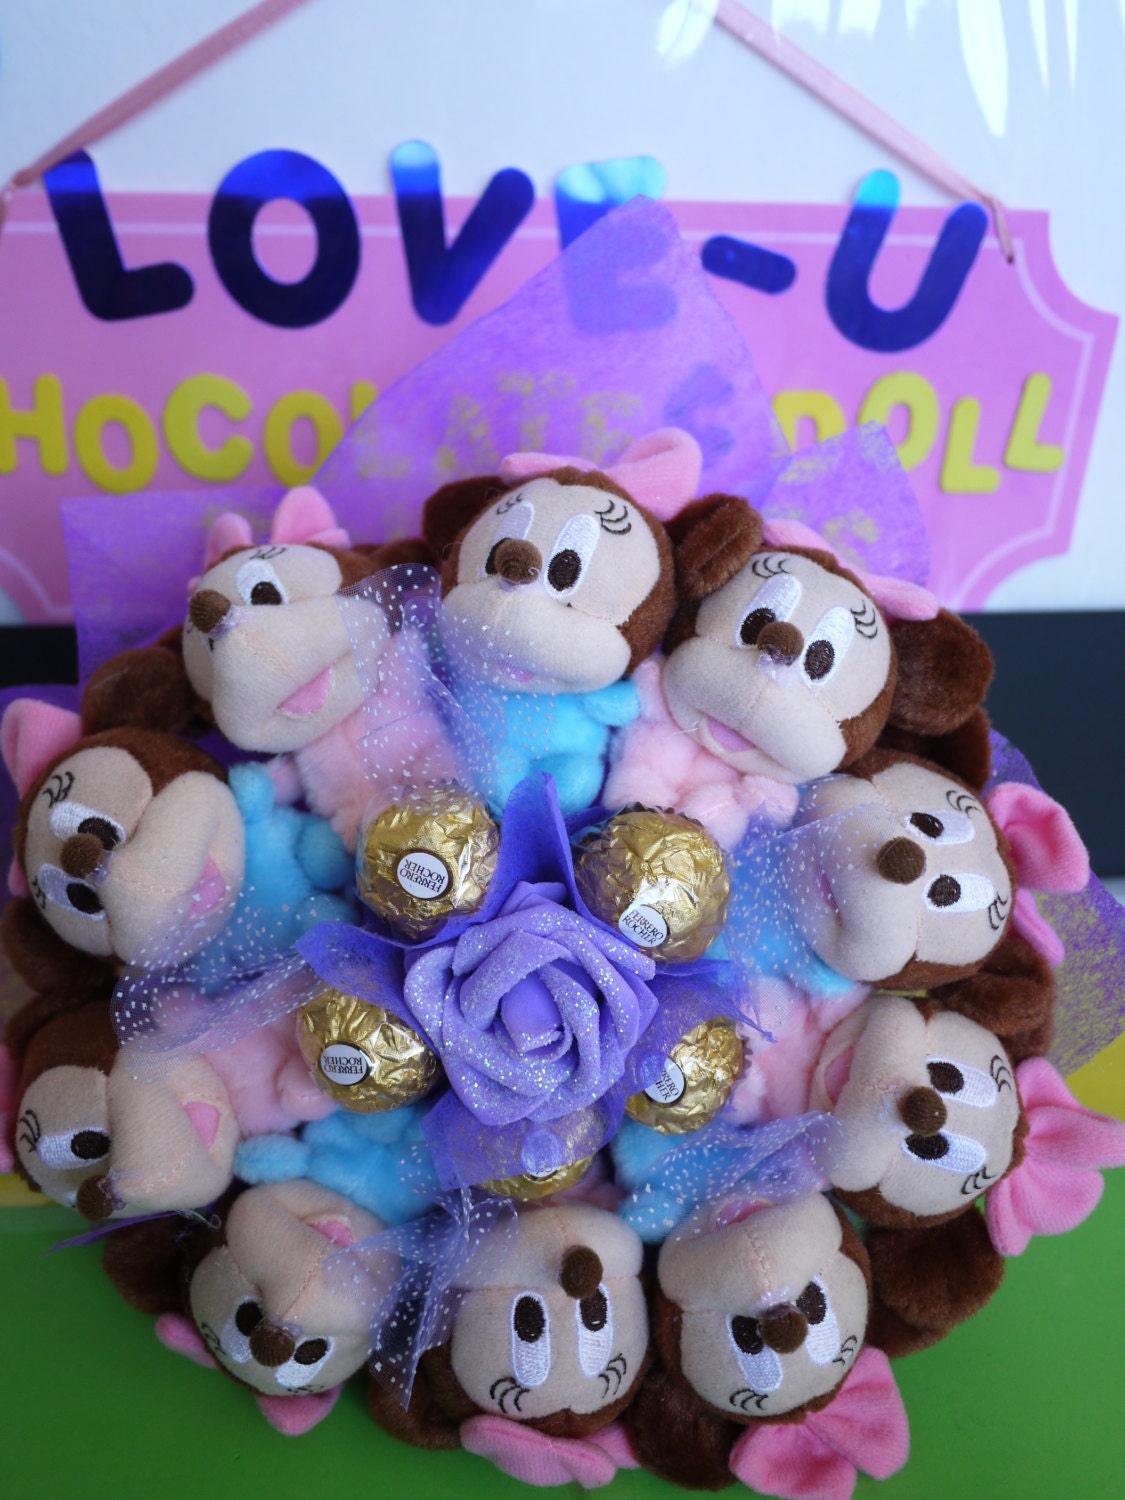 Blue & Pink Mickey Plush Dolls with Ferrero Rocher Chocolates. *** Perfect baby shower / wedding gift!